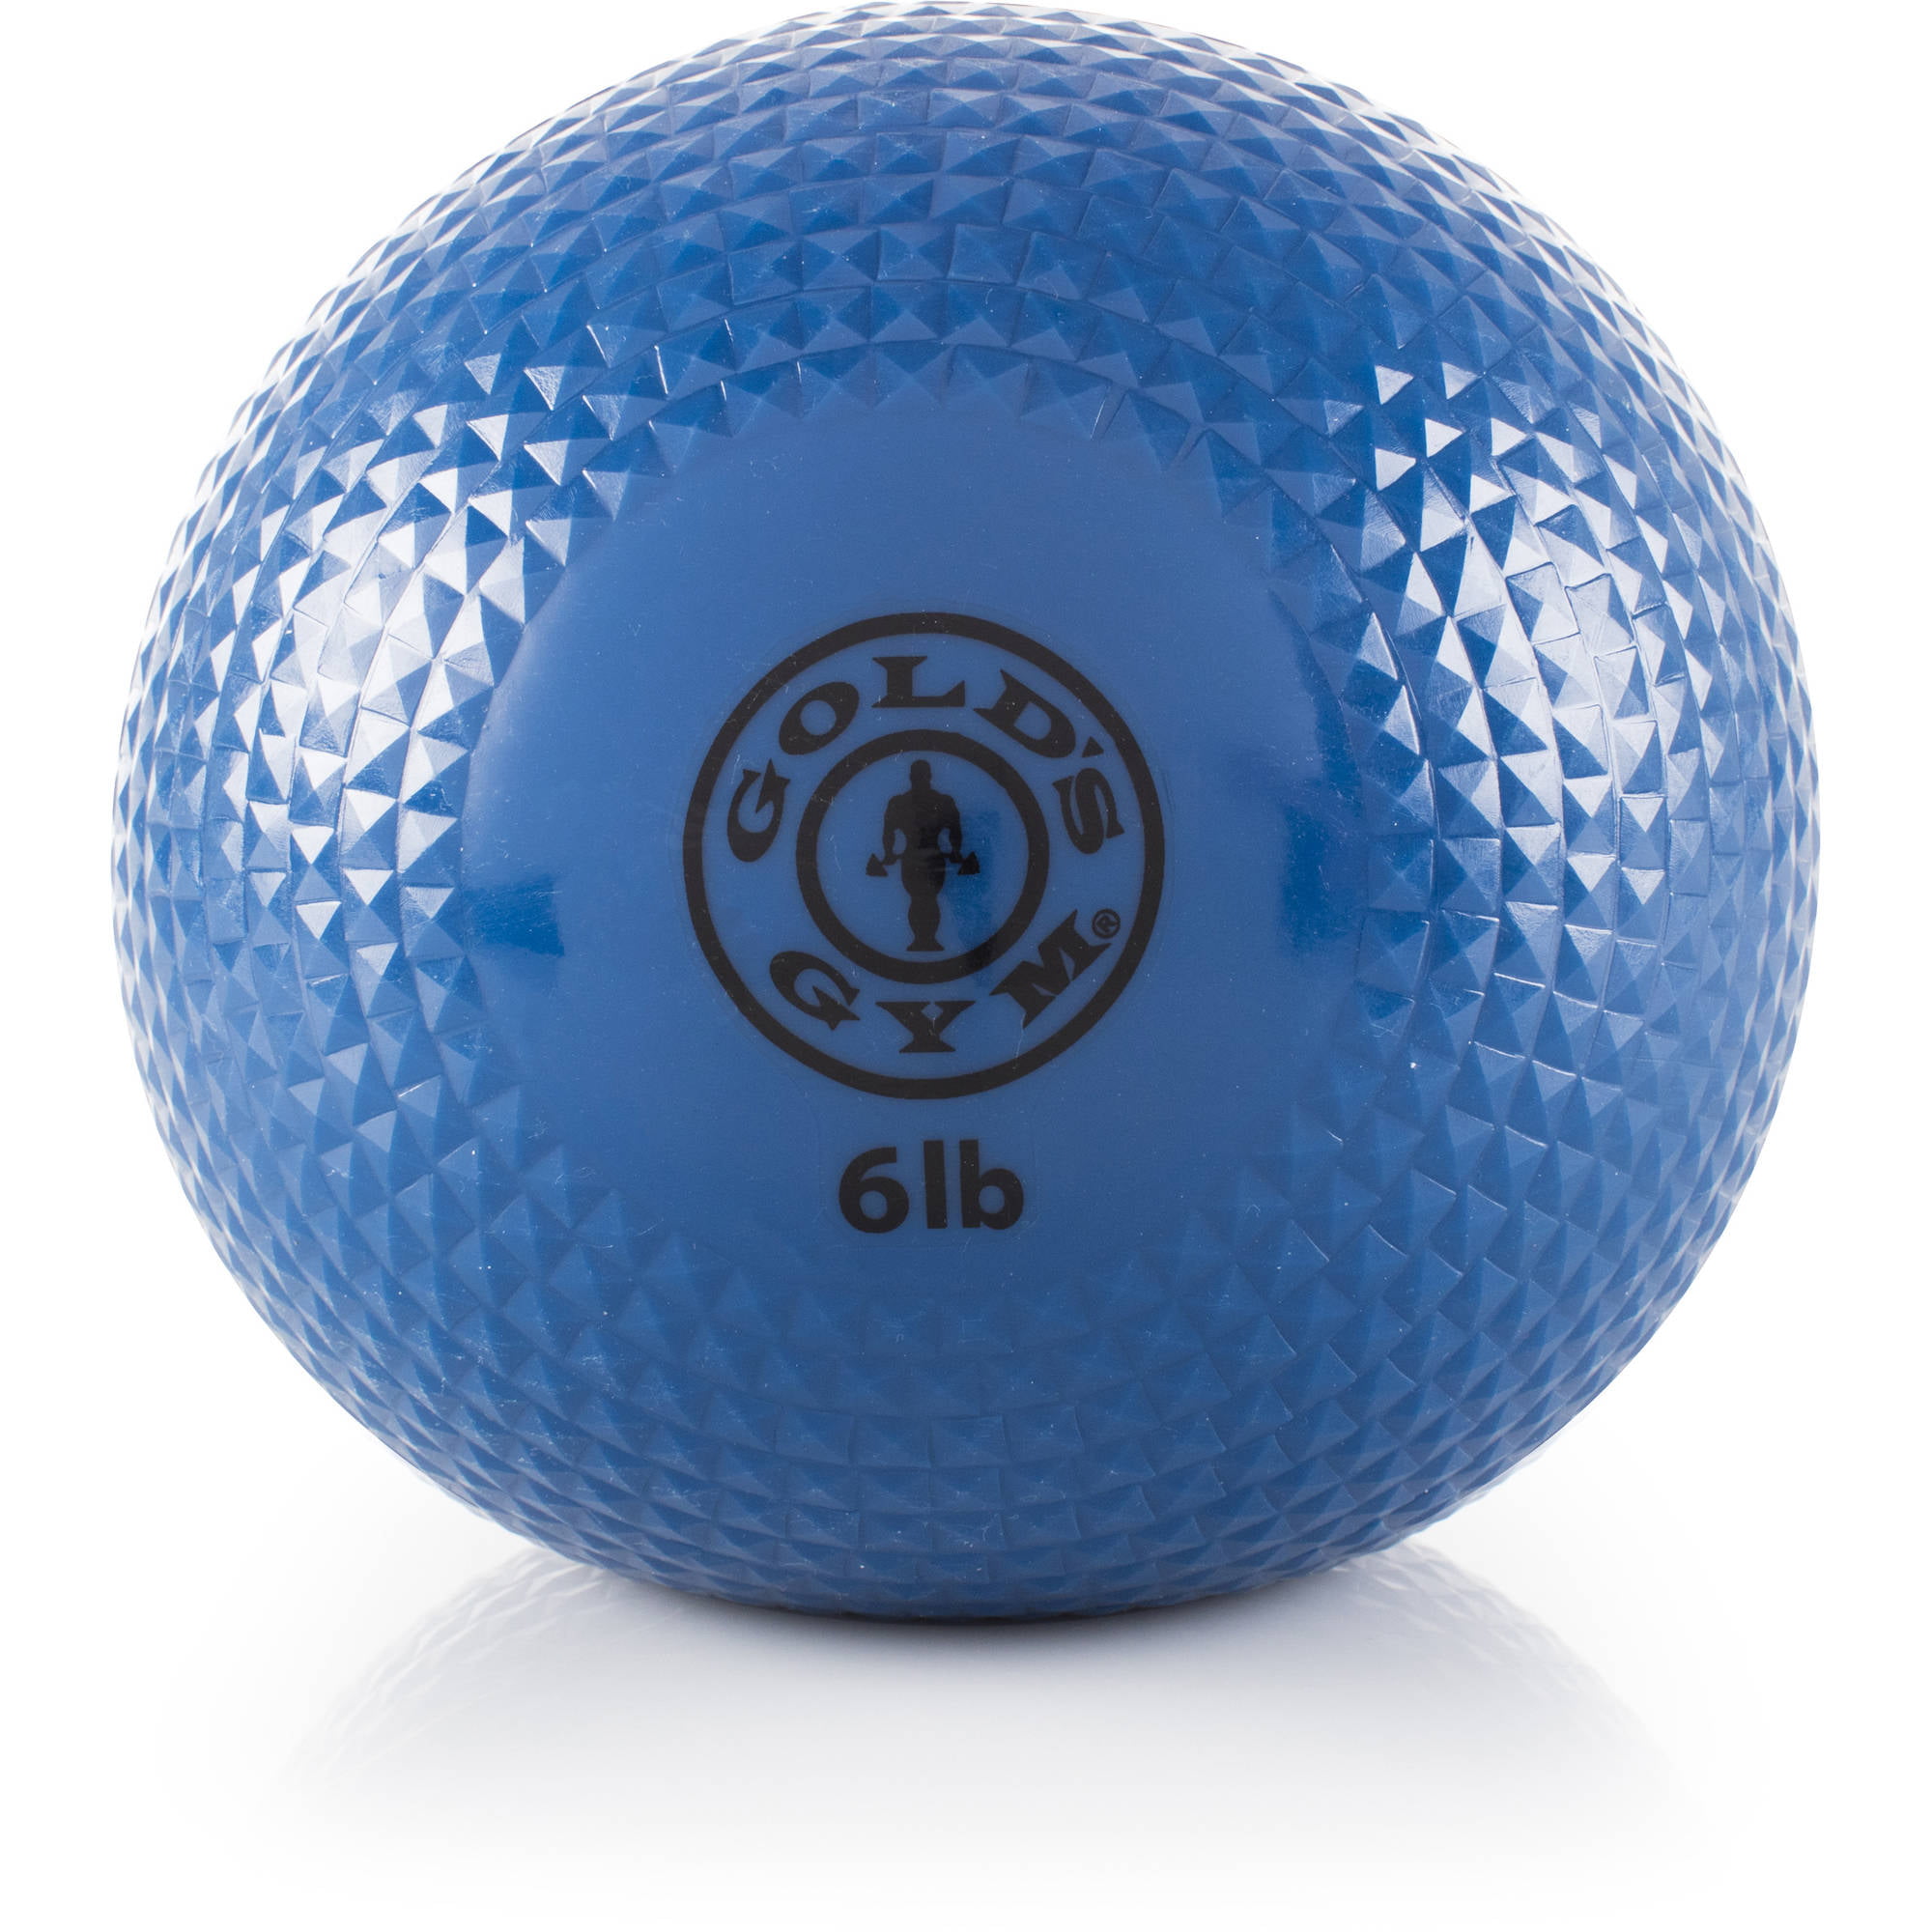 Gold's Gym Toning Ball, 6 lb - Walmart.com